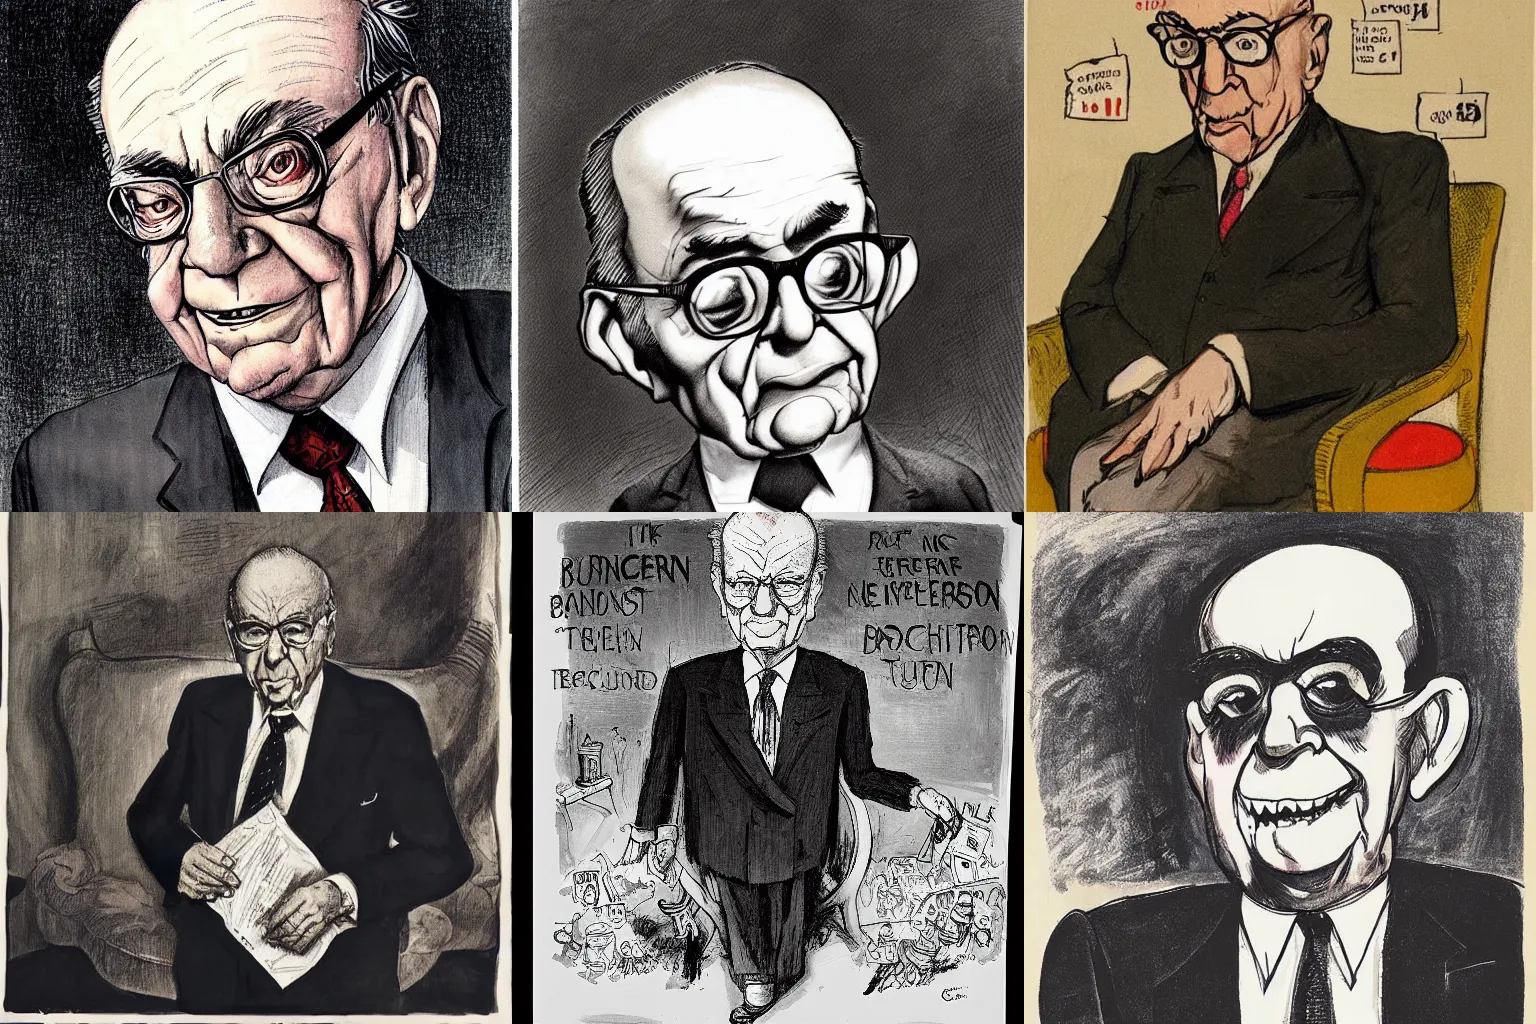 Prompt: “portrait of Rupert Murdoch as evil media baron, by George grosz”